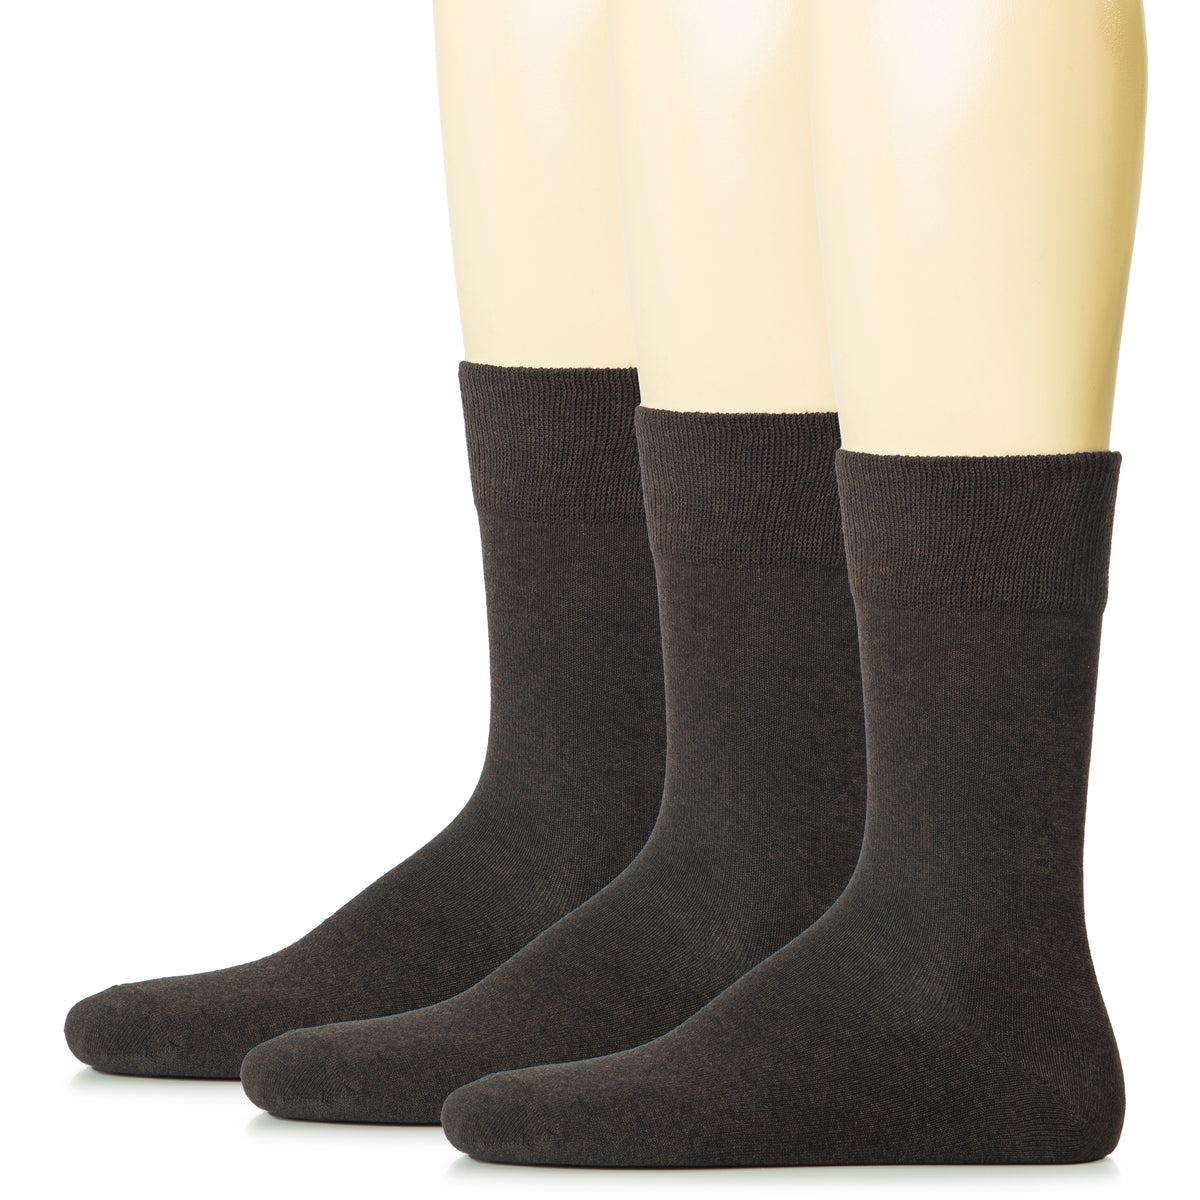 Hugh Ugoli Men Cotton Dress Socks XL / L / M / S Sizes, 3 Pairs | Shoe Size:10-13 | Dark Gray